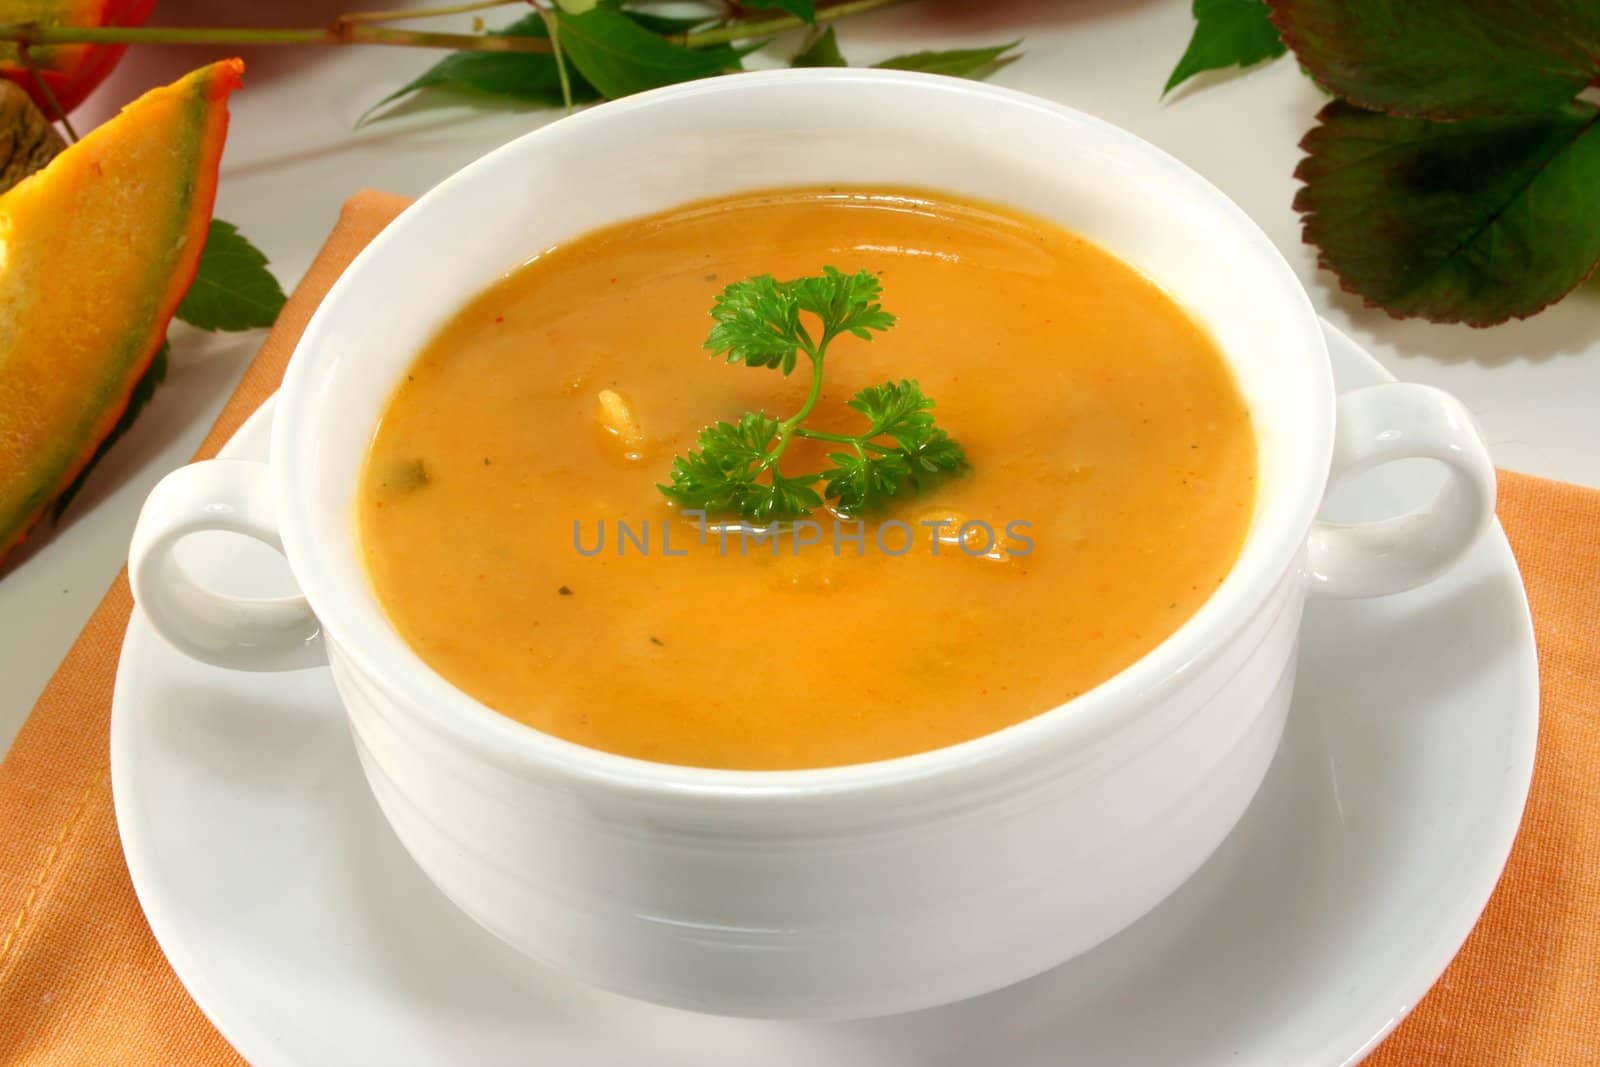 a white Soup cup with fresh pumpkin soup